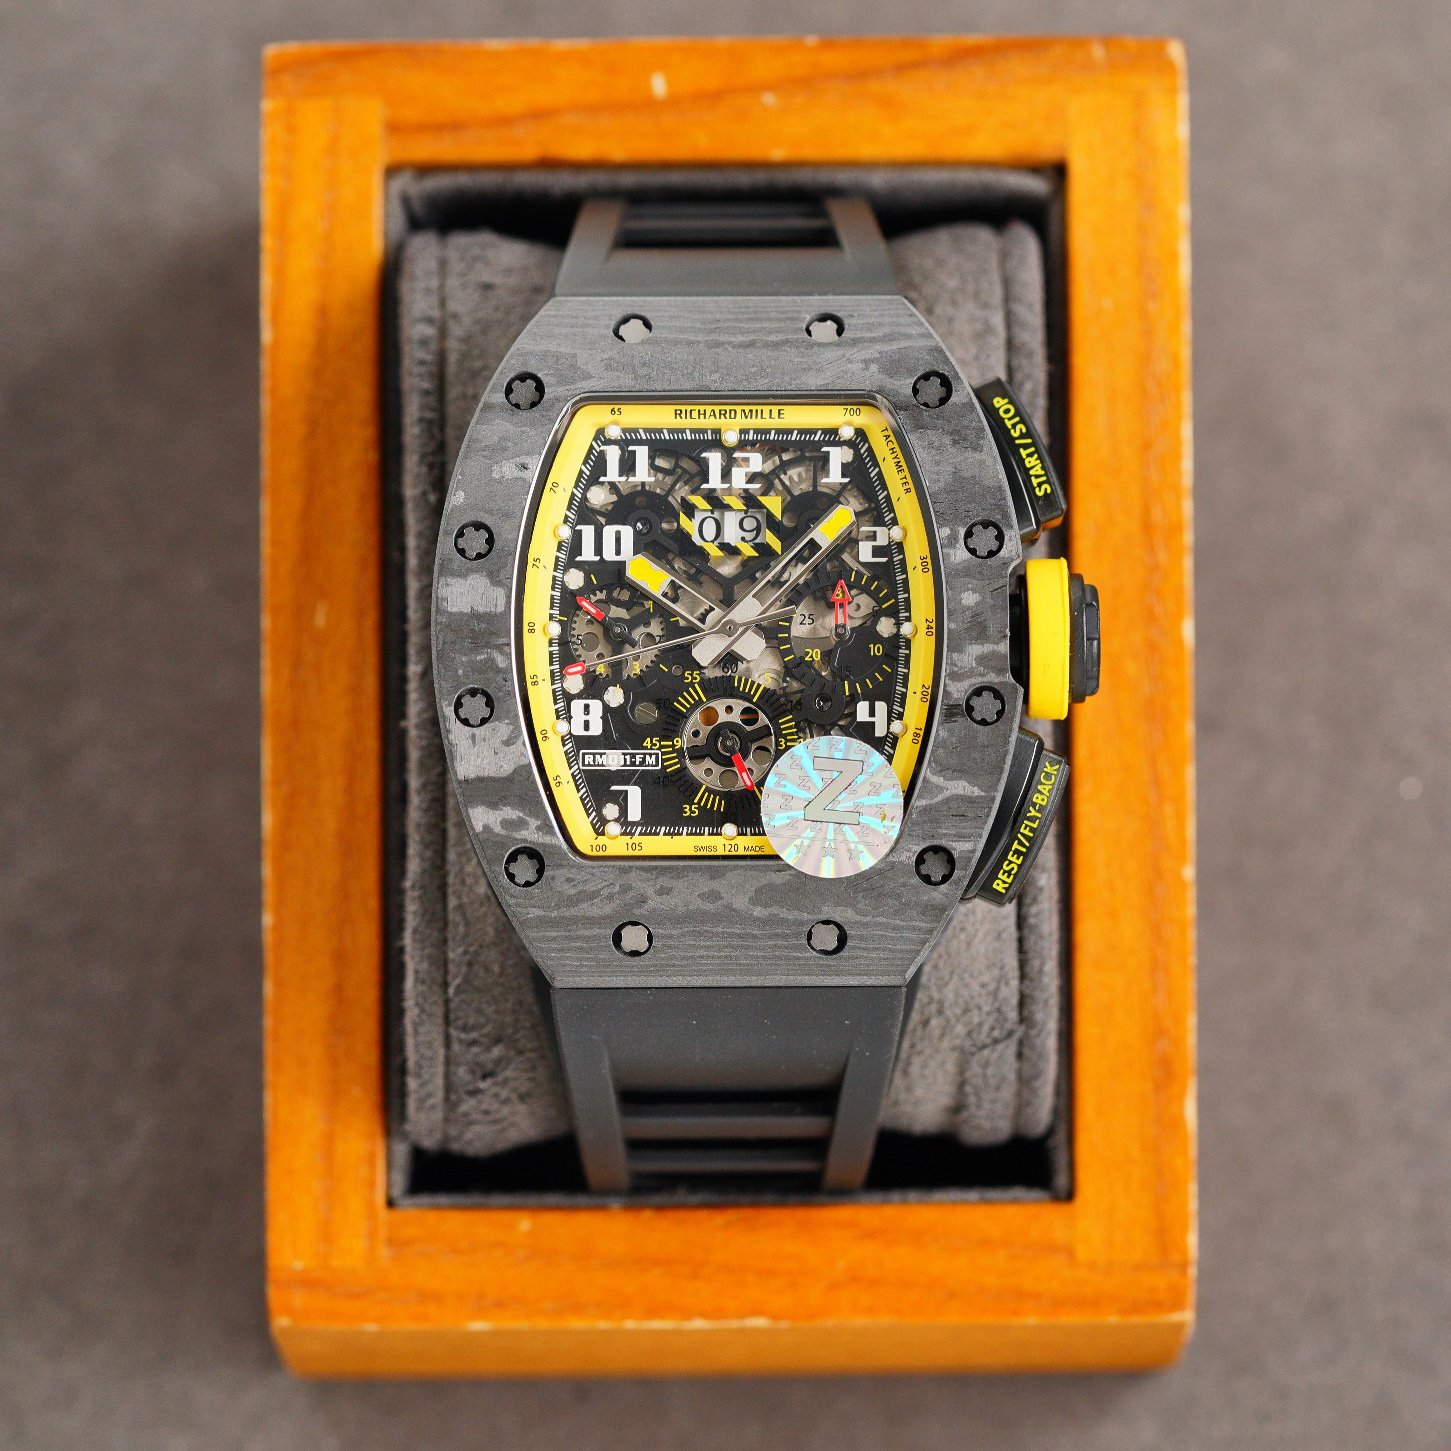 Richard Miller RM11-03 Watch(40x50x16mm  ) - DesignerGu